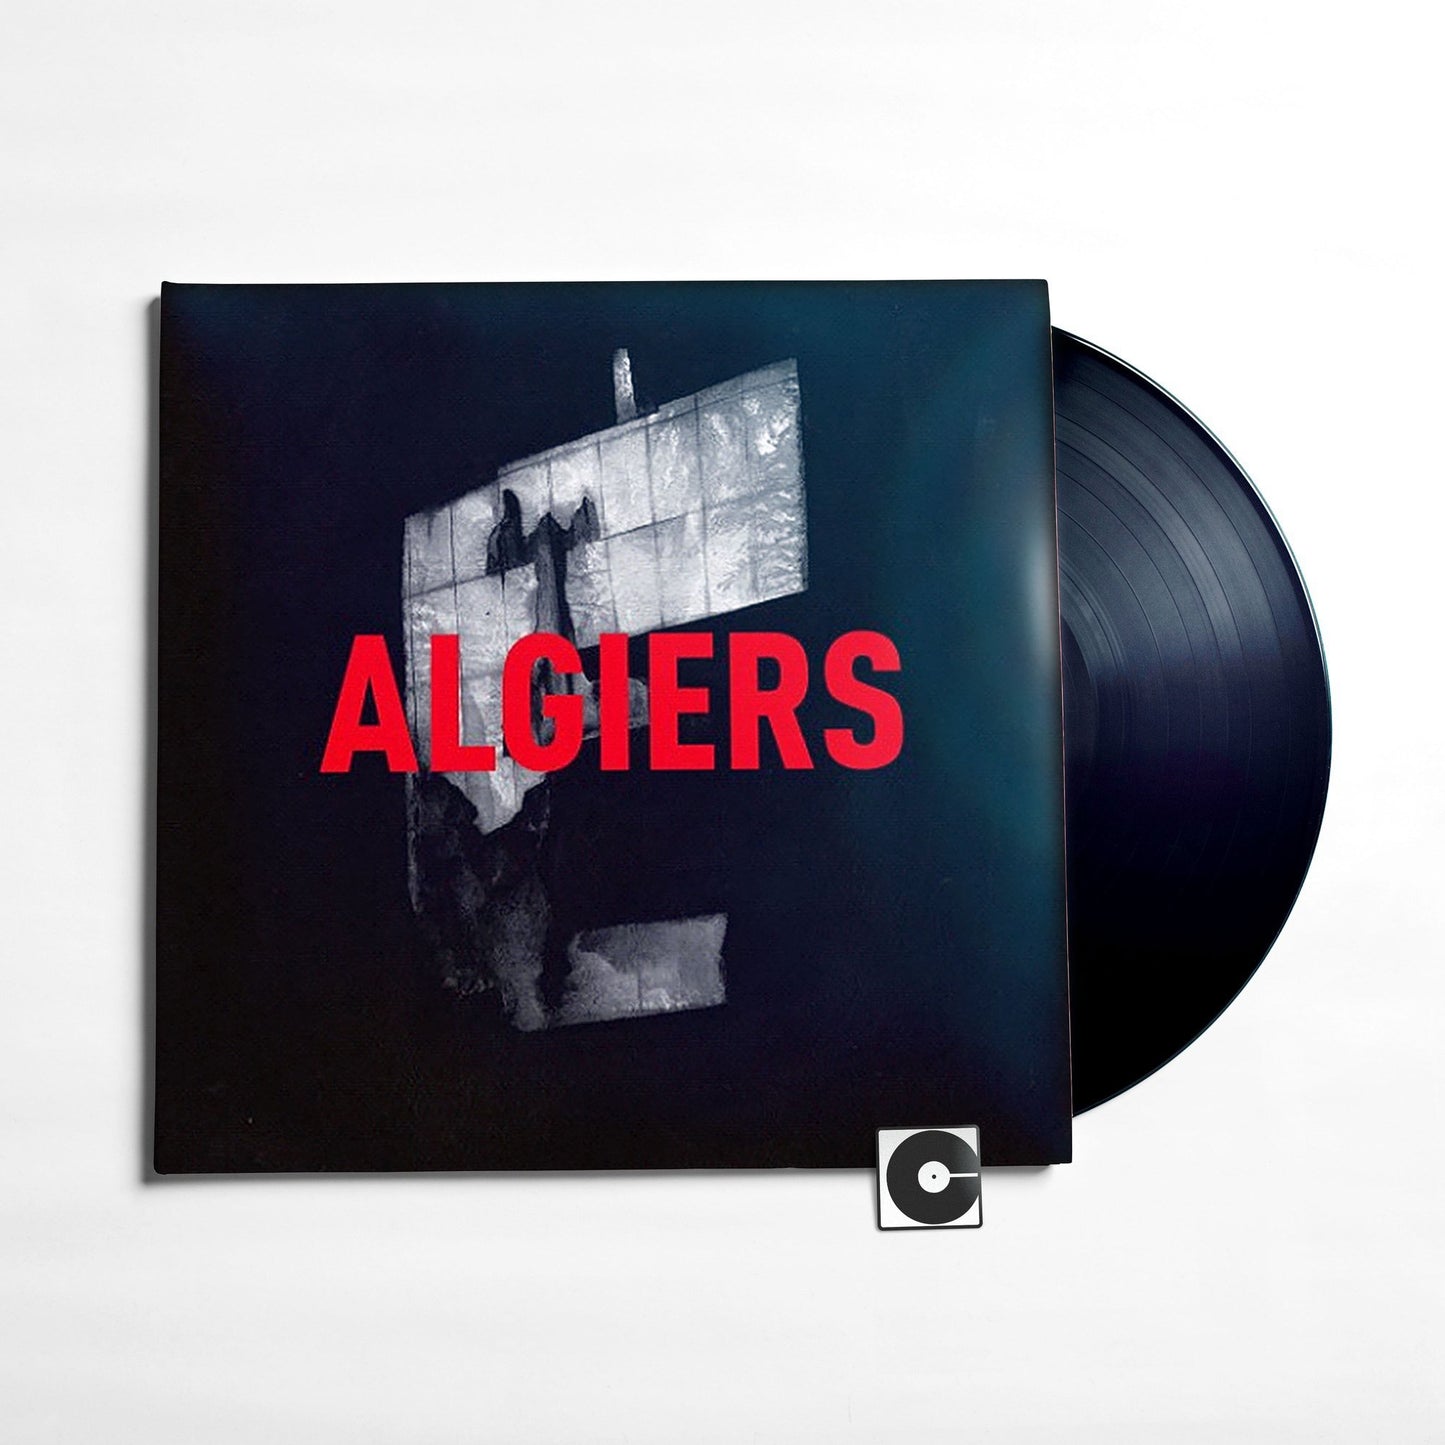 Algiers - "Algiers"